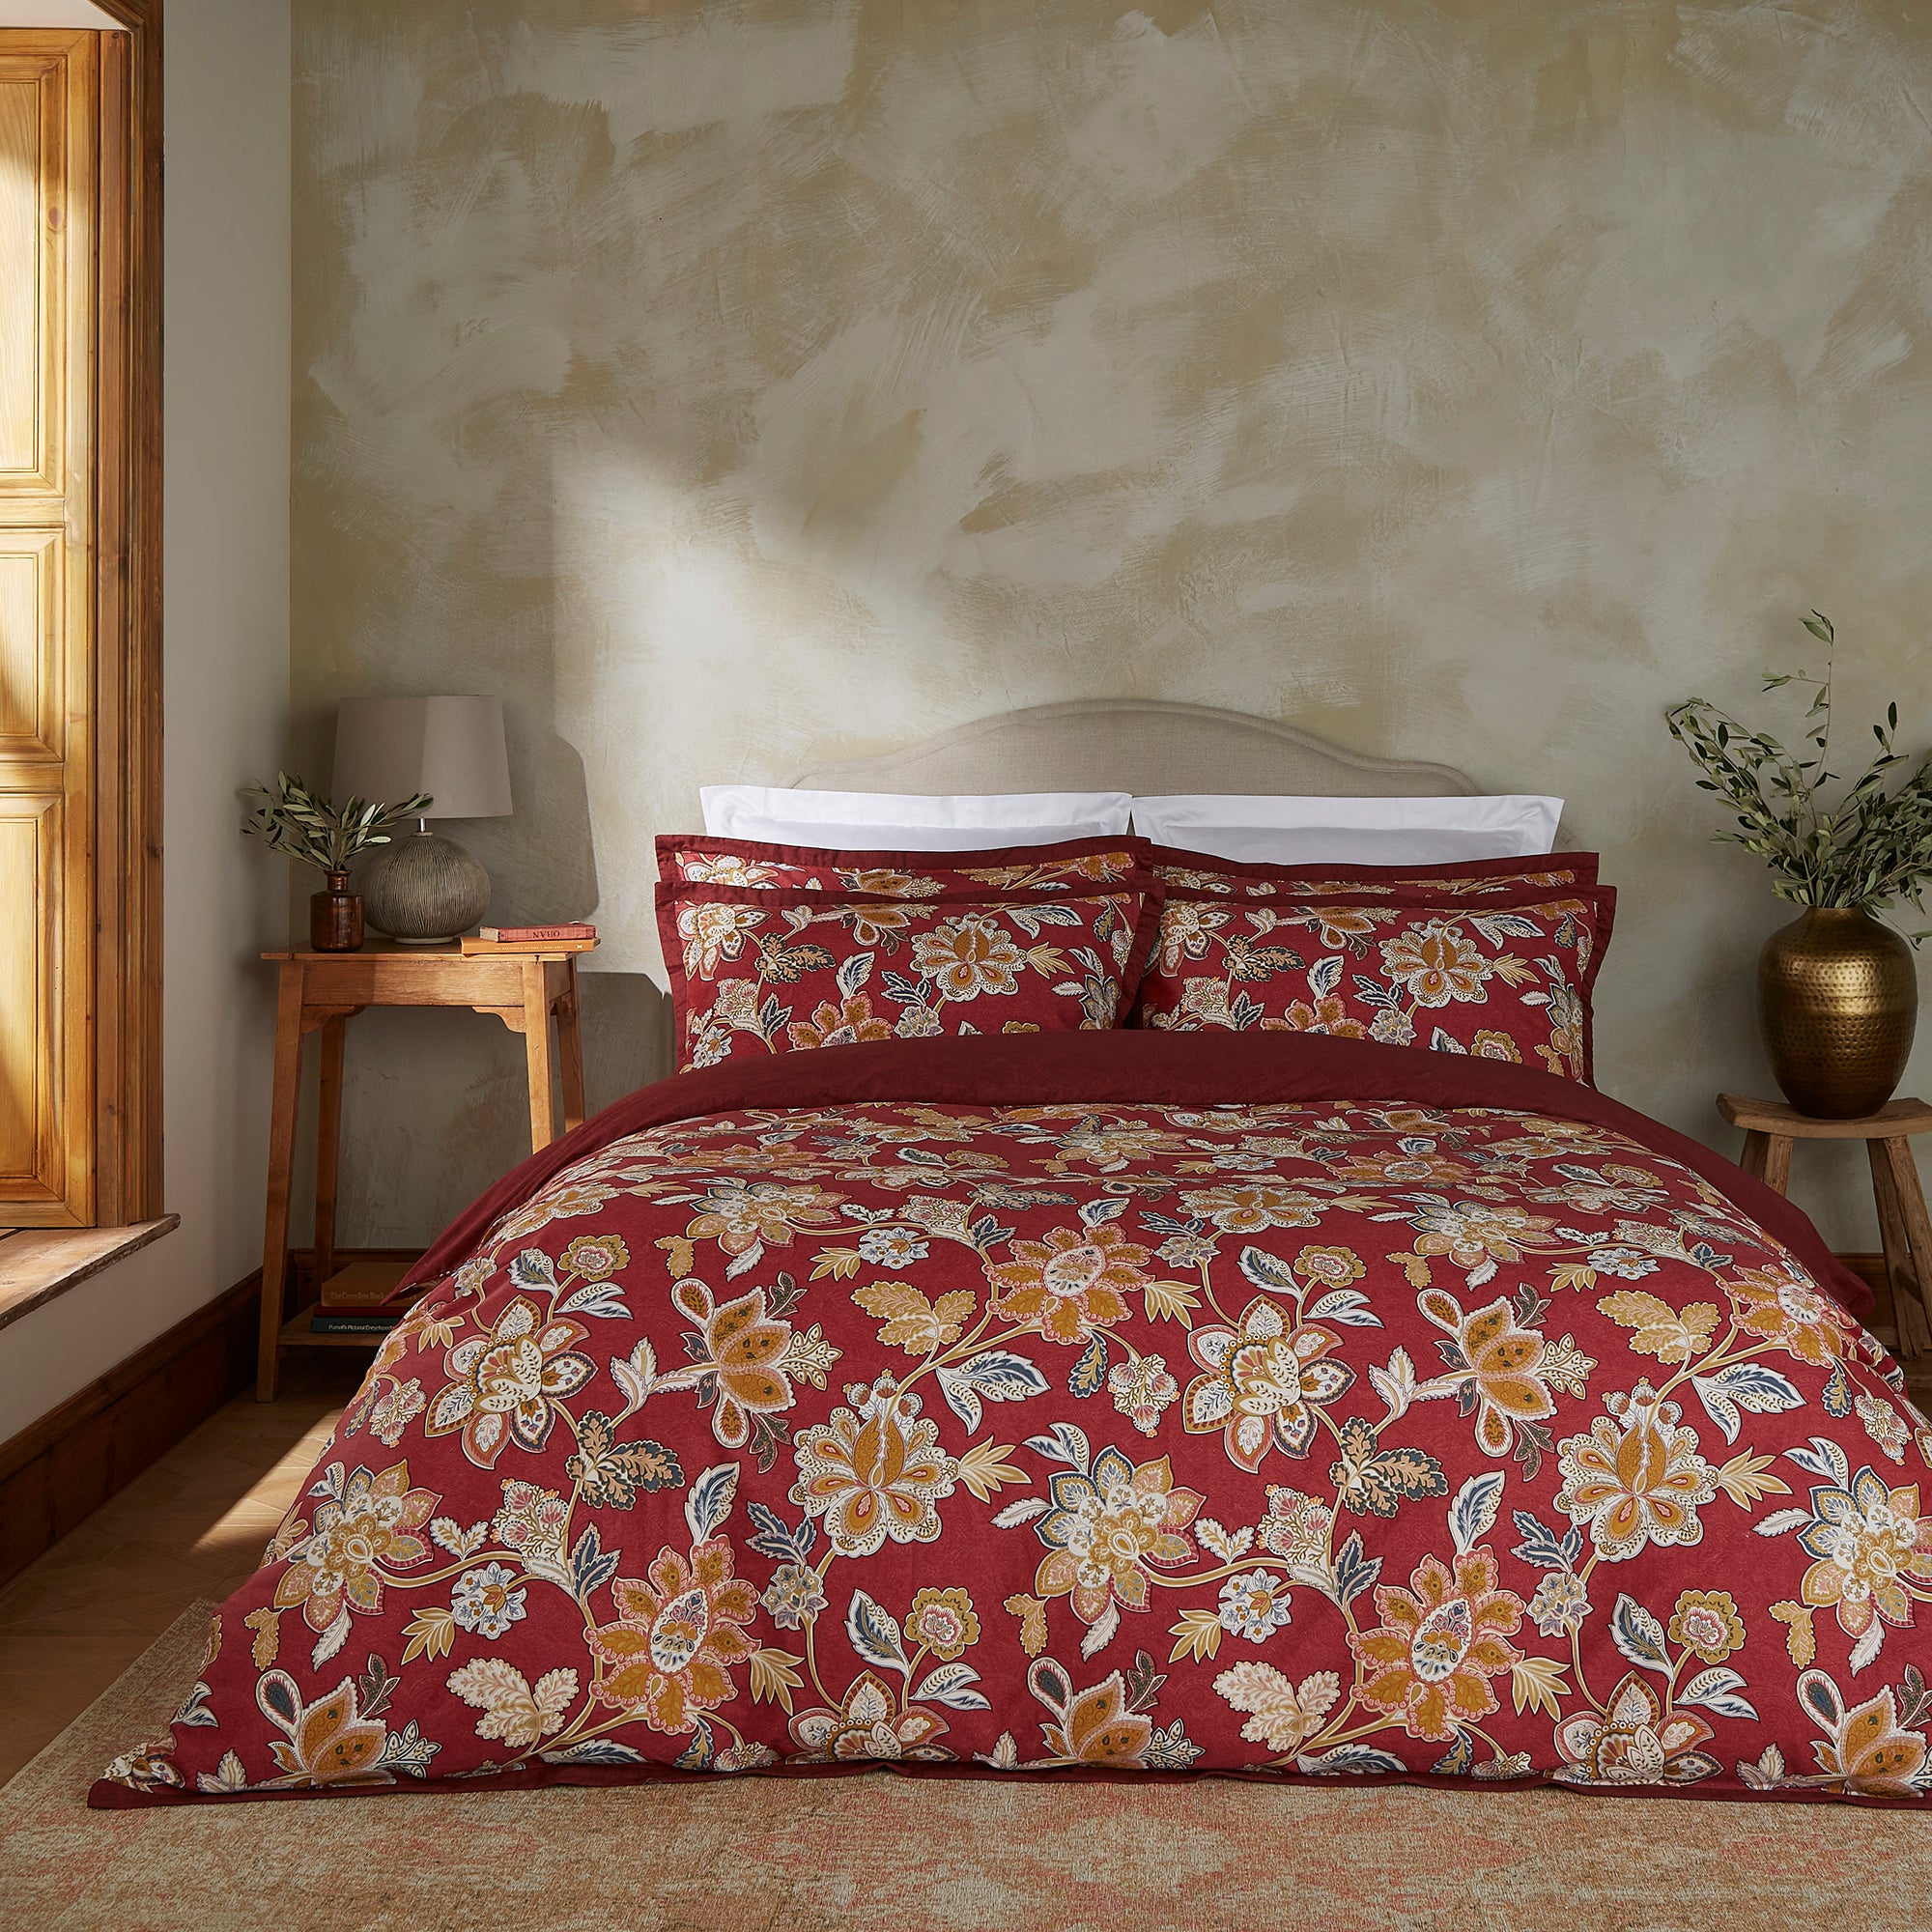 Dorma Samira Saffron Red Cotton Duvet Cover and Pillowcase Set